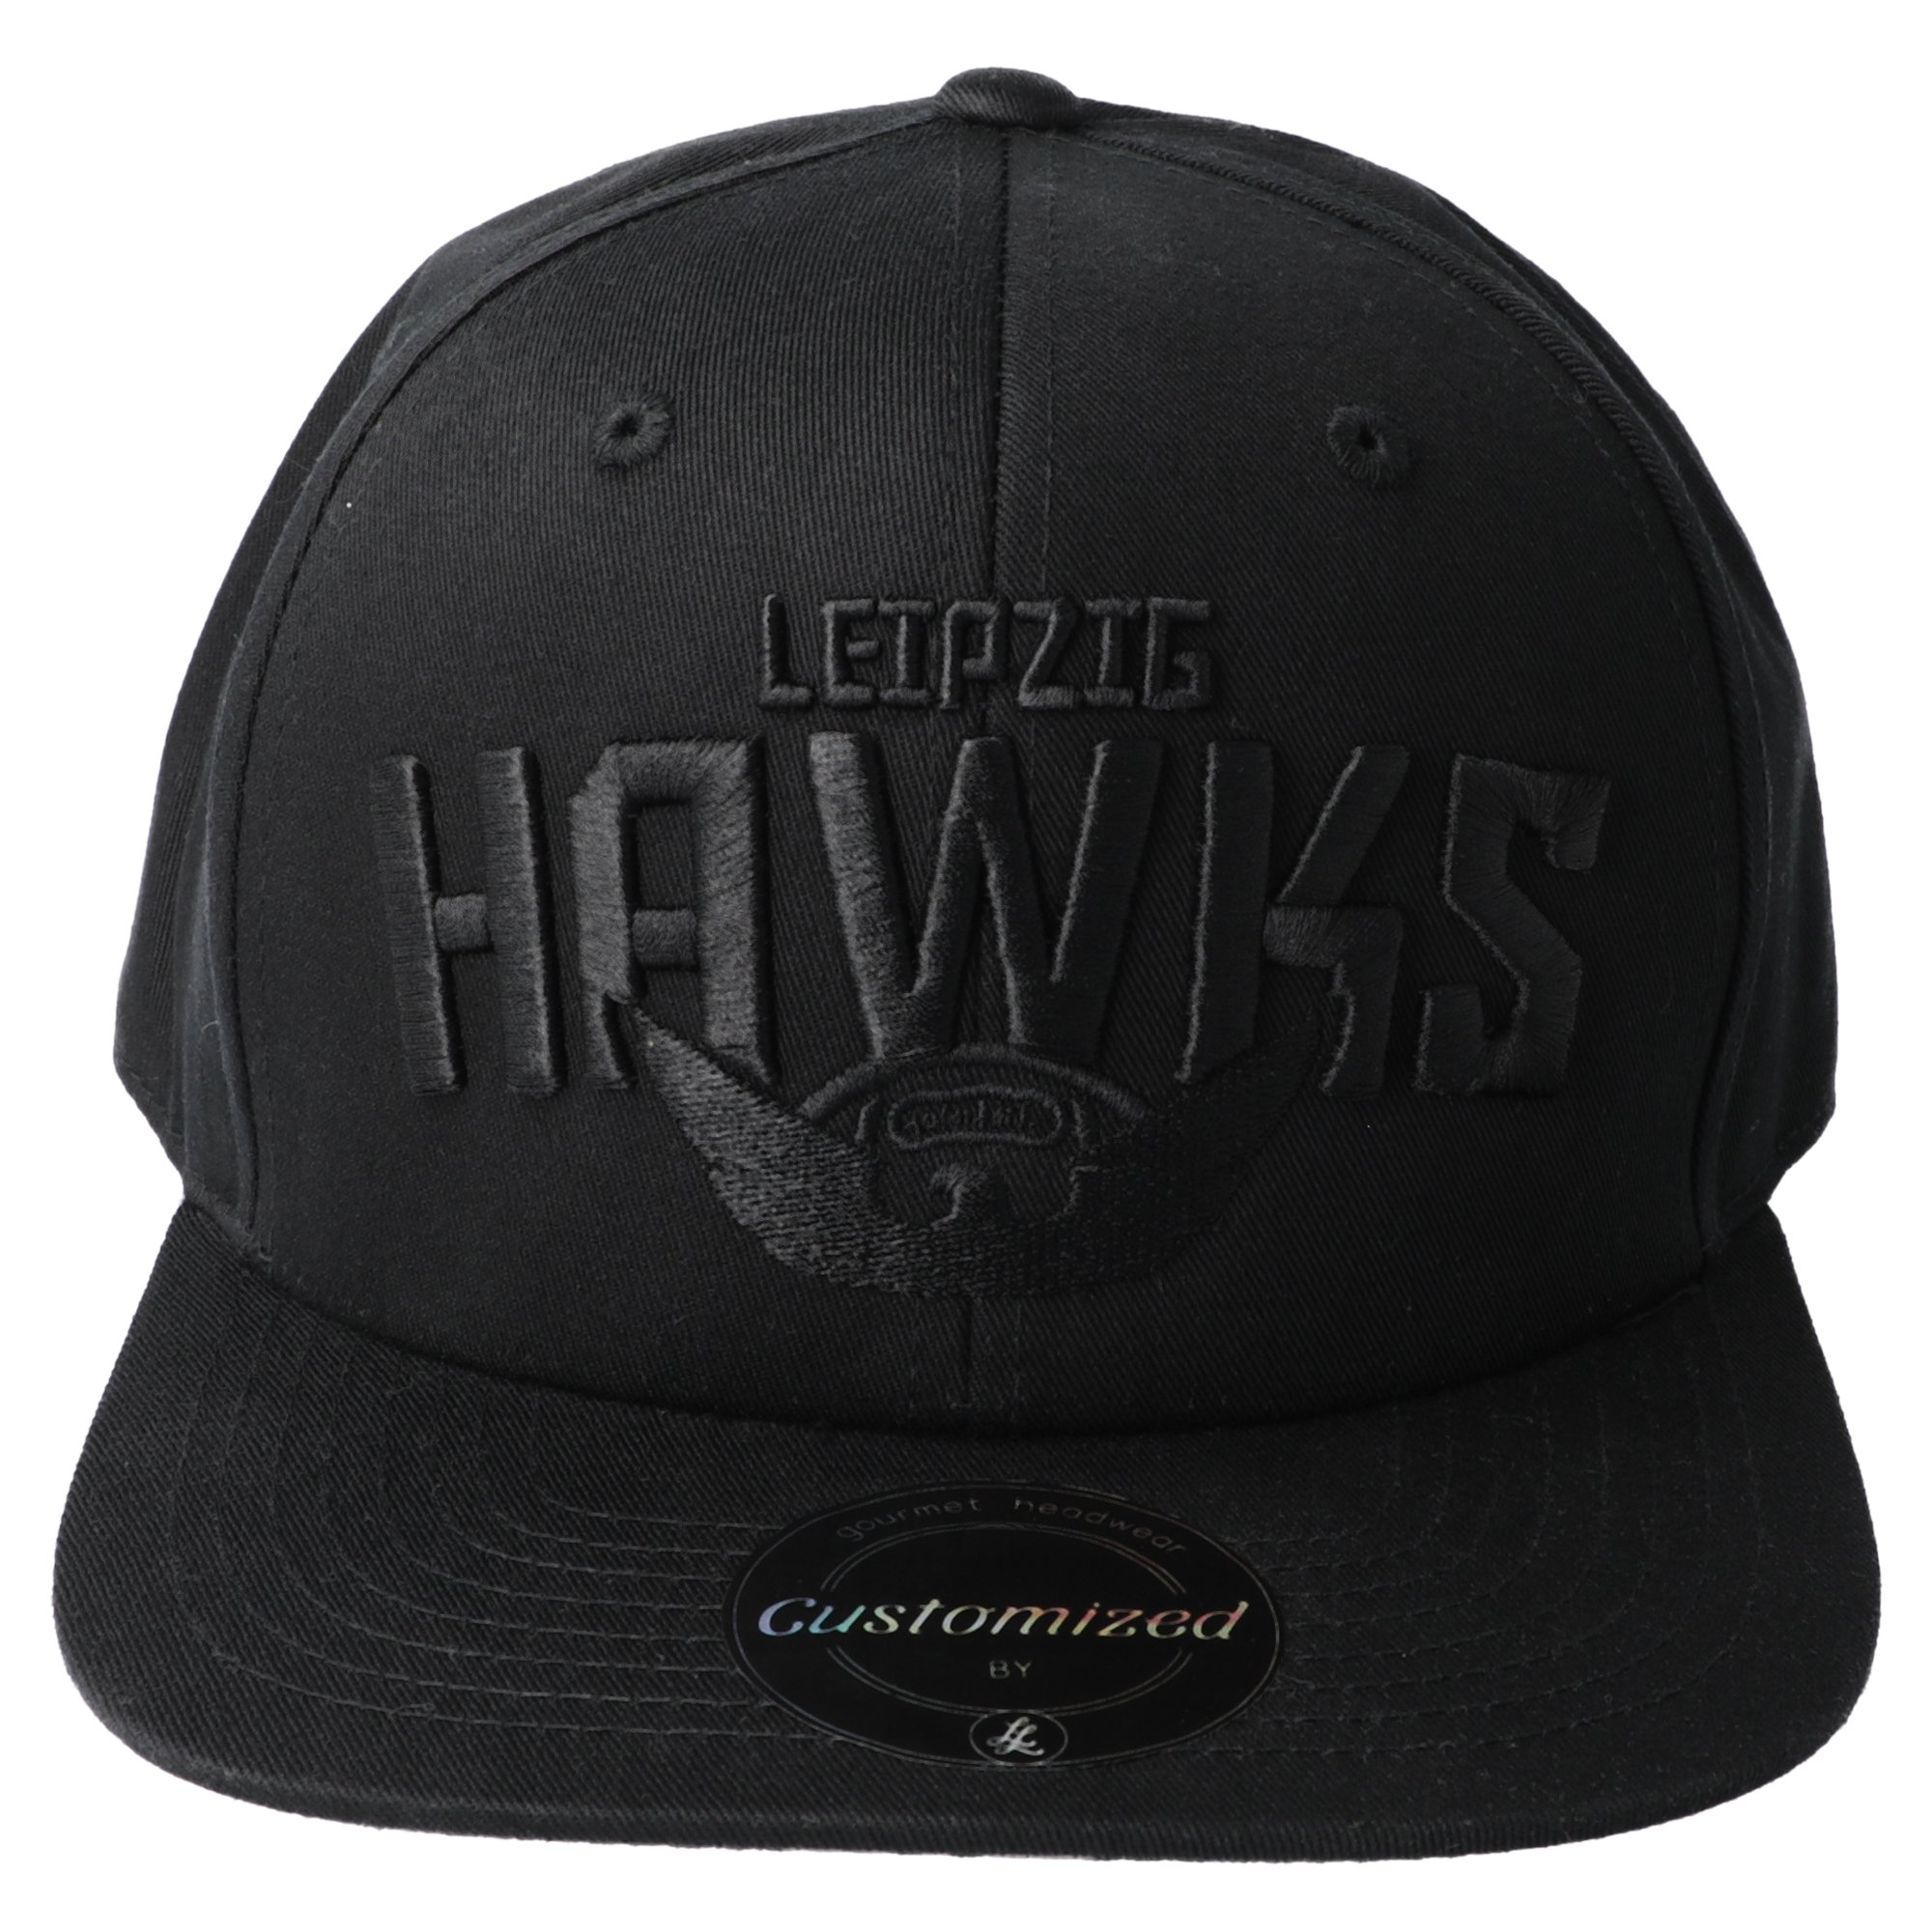 Leipzig Hawks Flat Cap